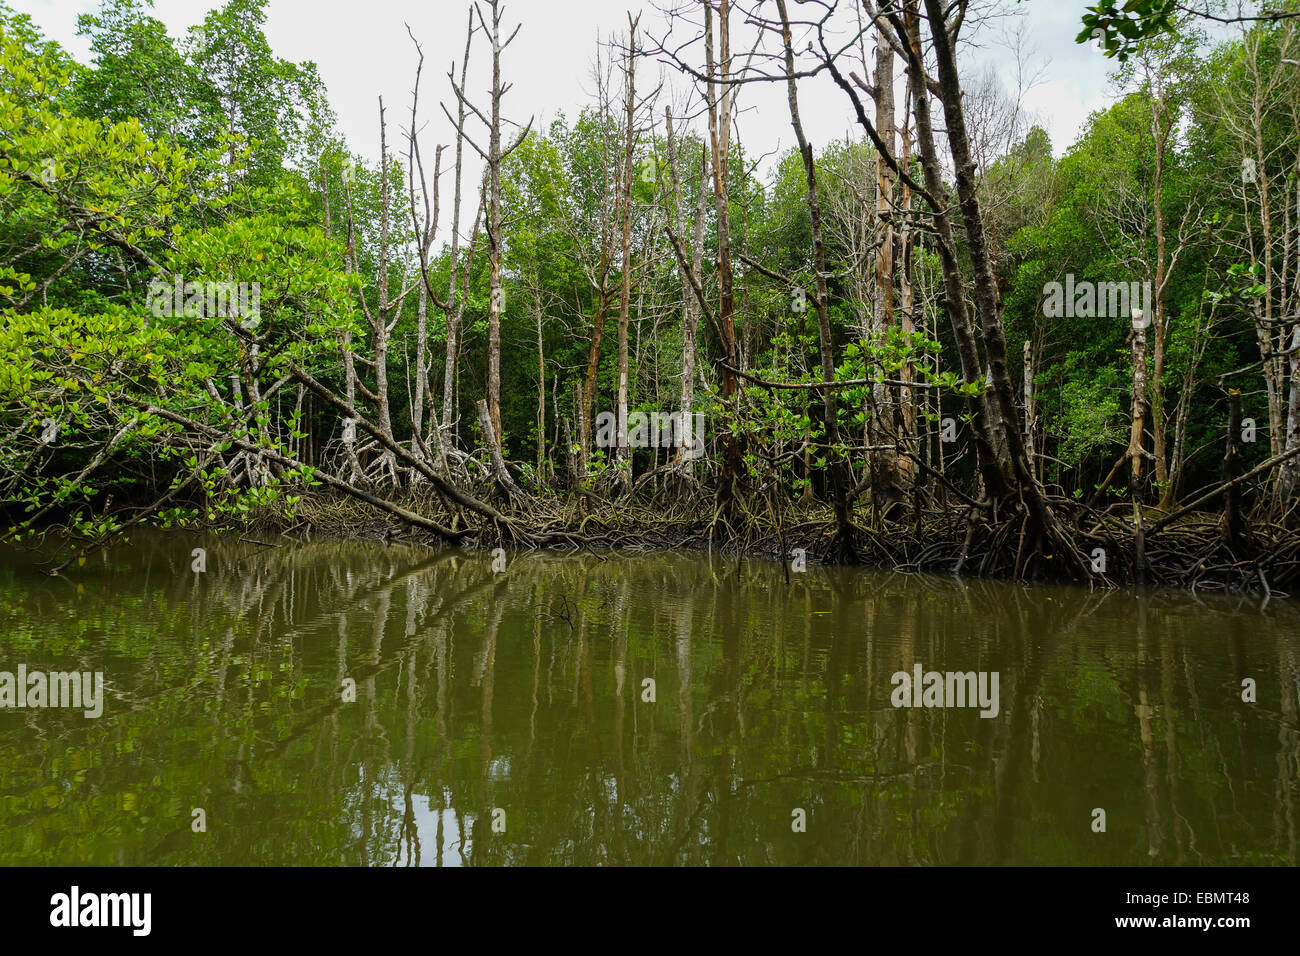 Mangrove forest, Langkawi island, Malaysia Stock Photo